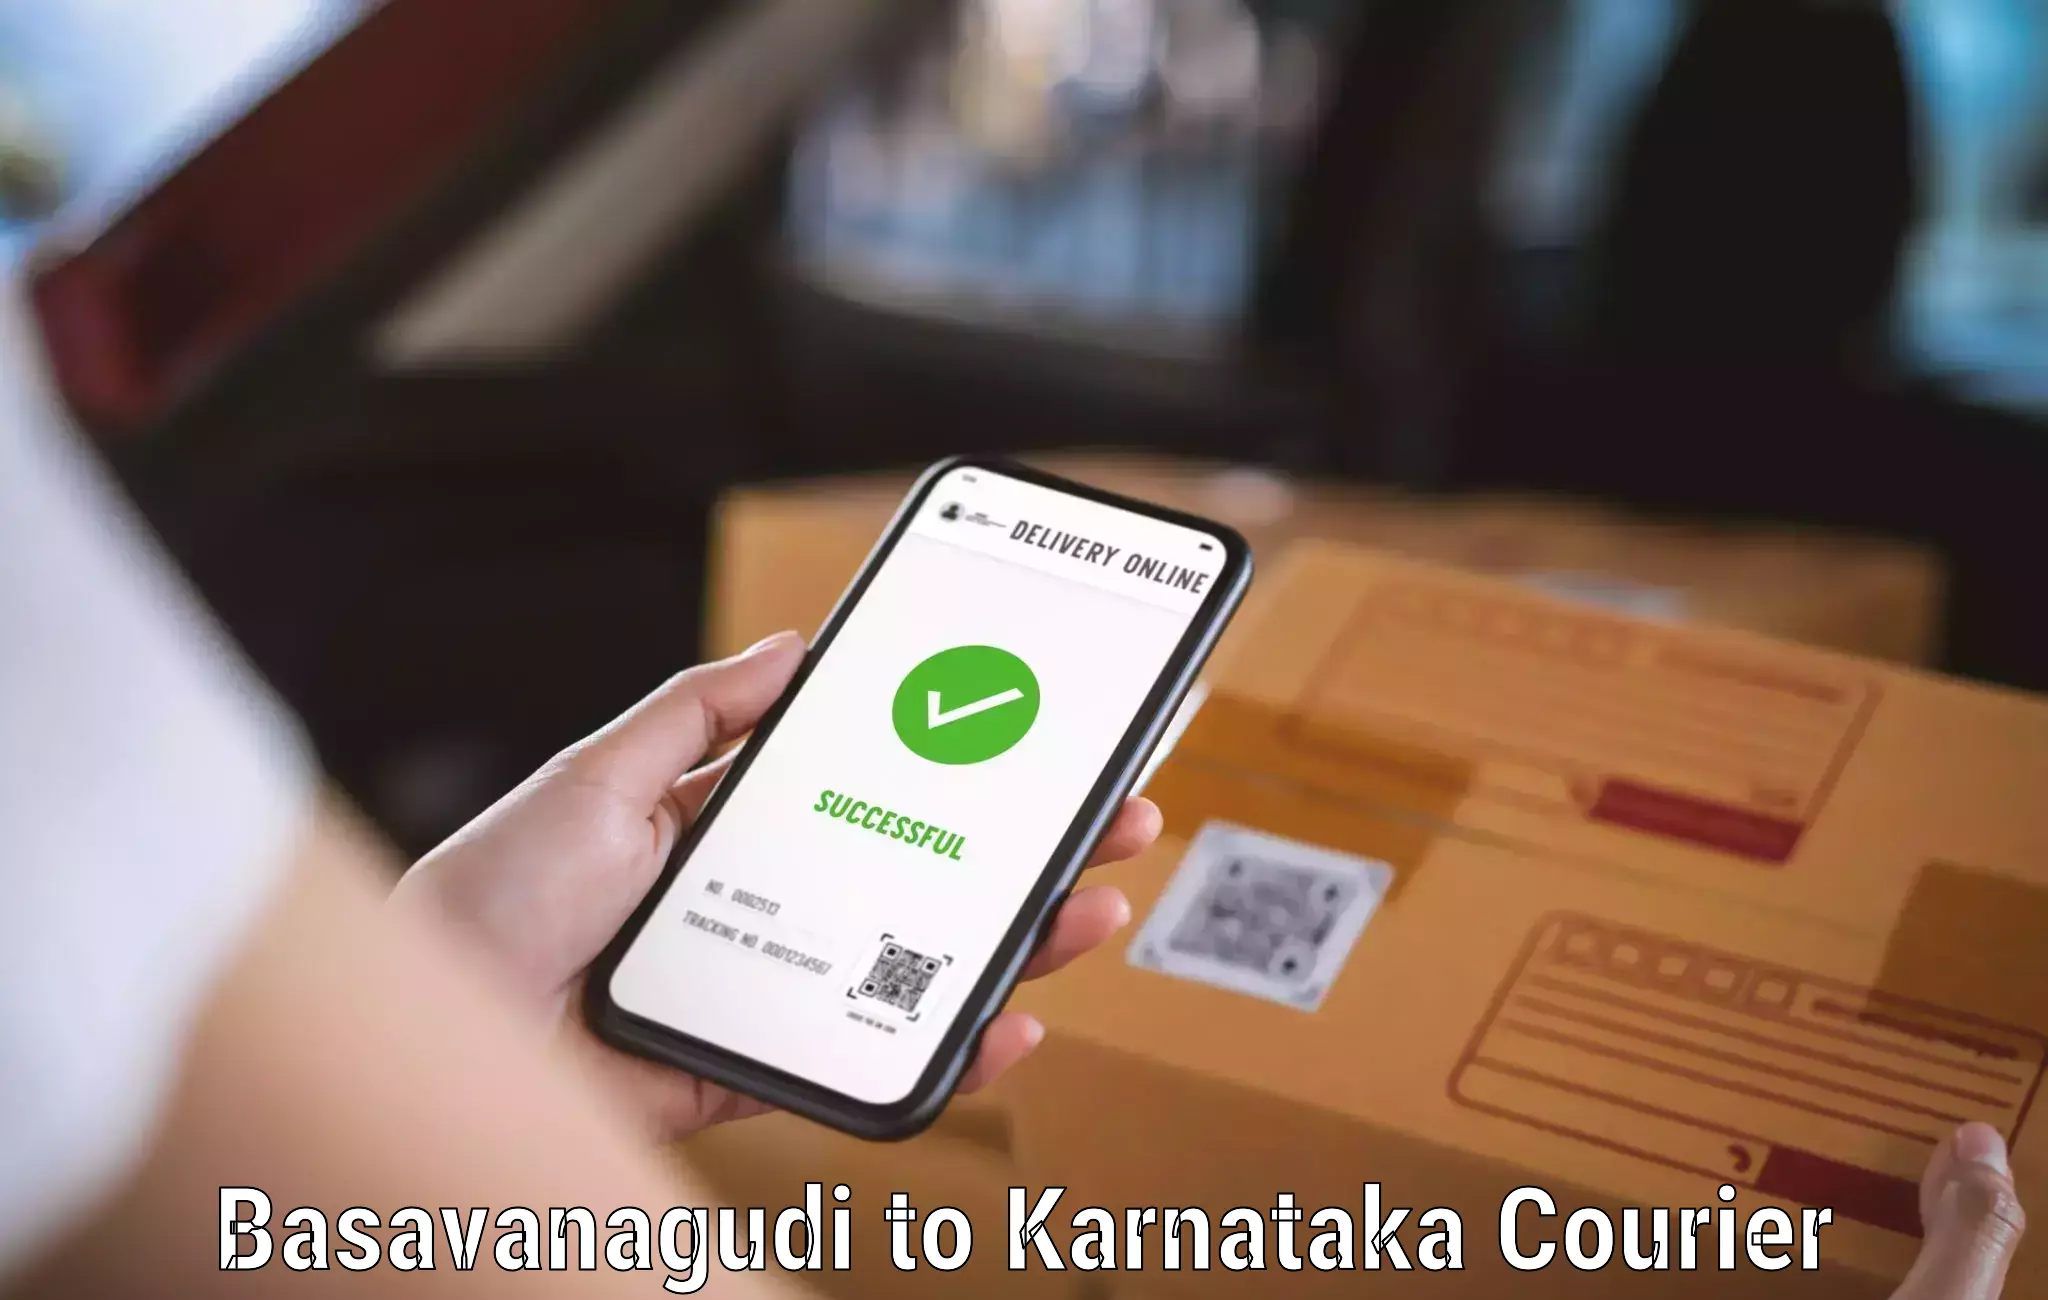 Courier service partnerships Basavanagudi to Holalkere